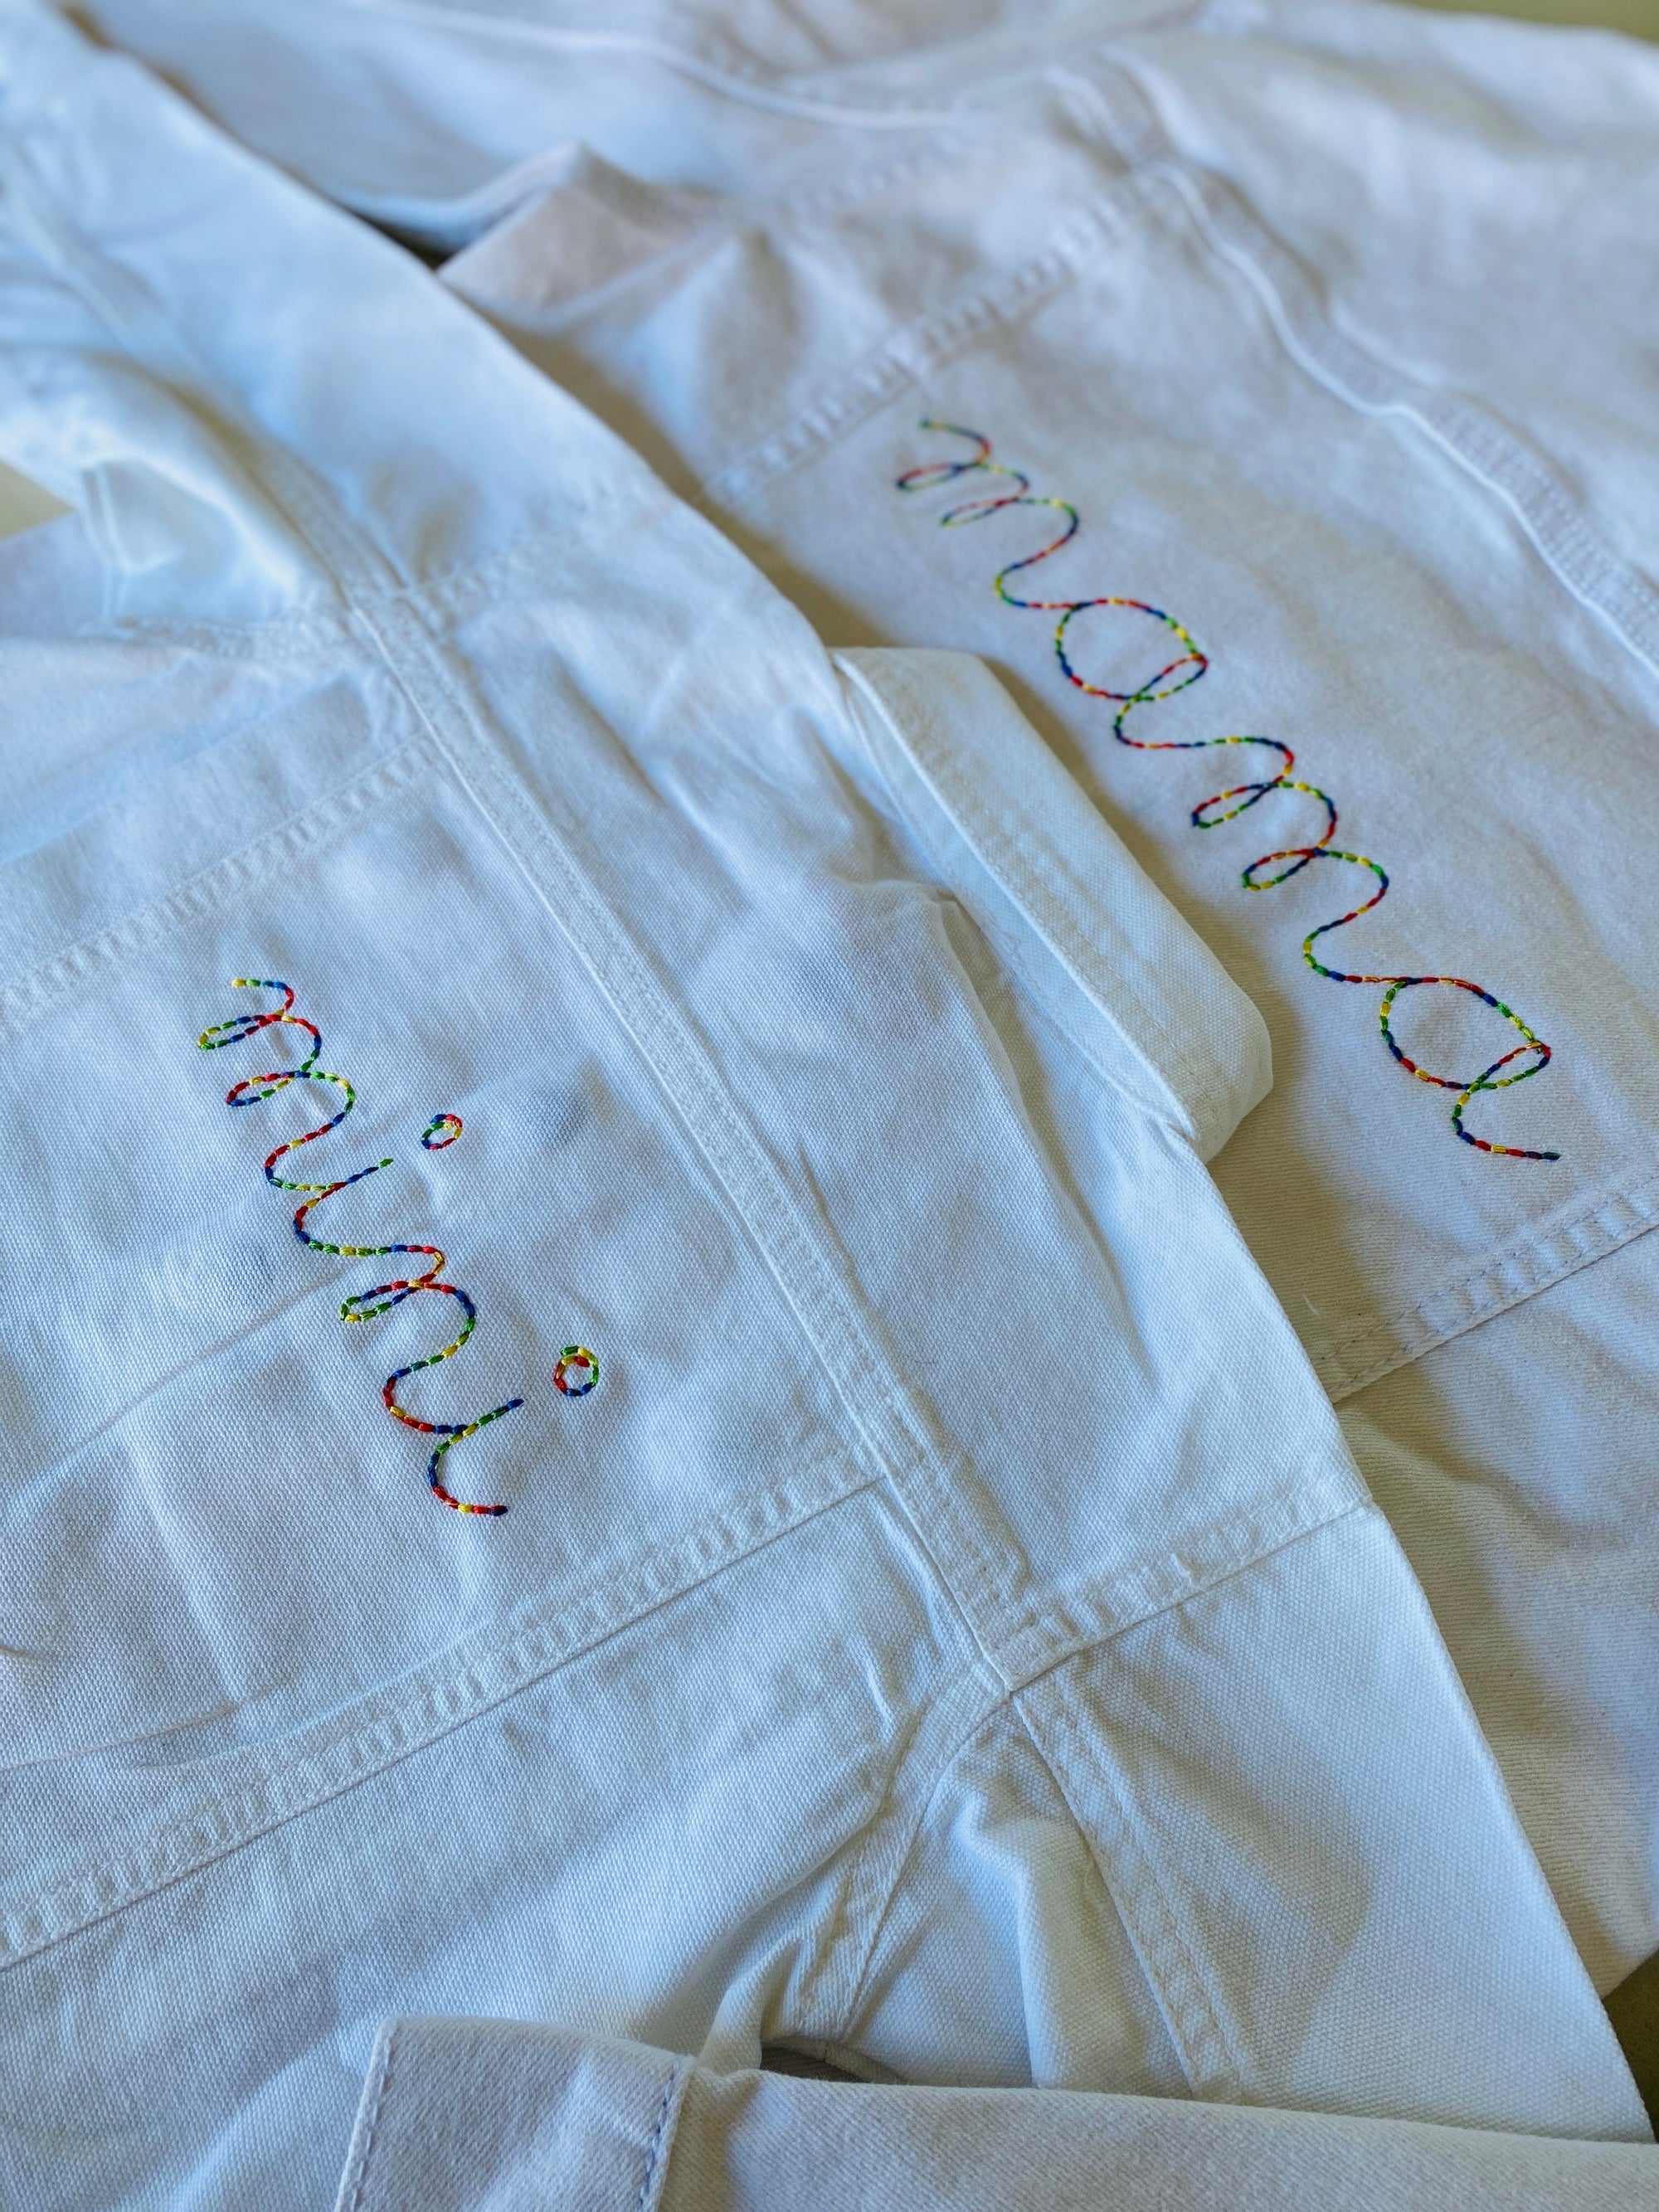 juju + stitch Personalized Custom Embroidered Adult XS / White Denim / mama "mama" Adult White Denim Jacket Mommy & Me Matching